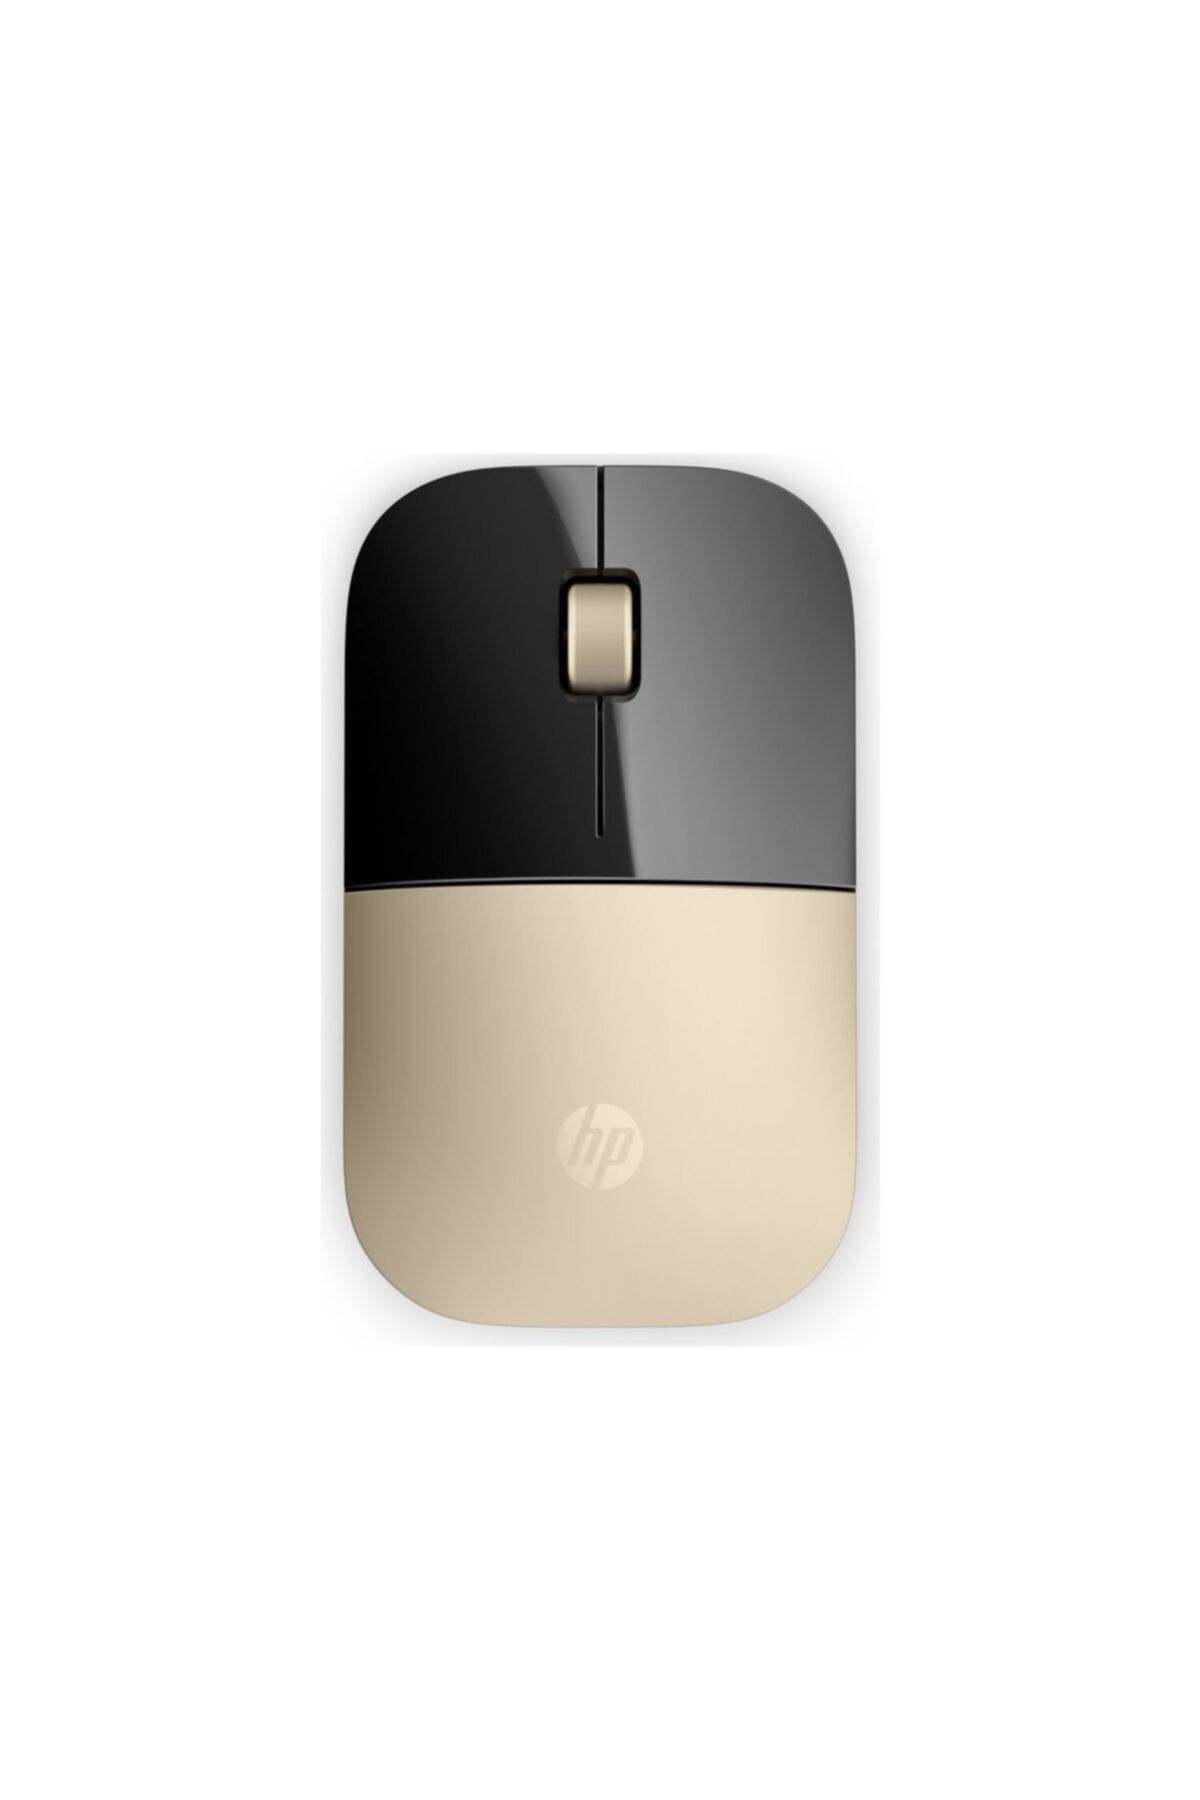 HP X7Q43AA Z3700 Kablosuz Ince & Sessiz Mouse - Siyah & Altın